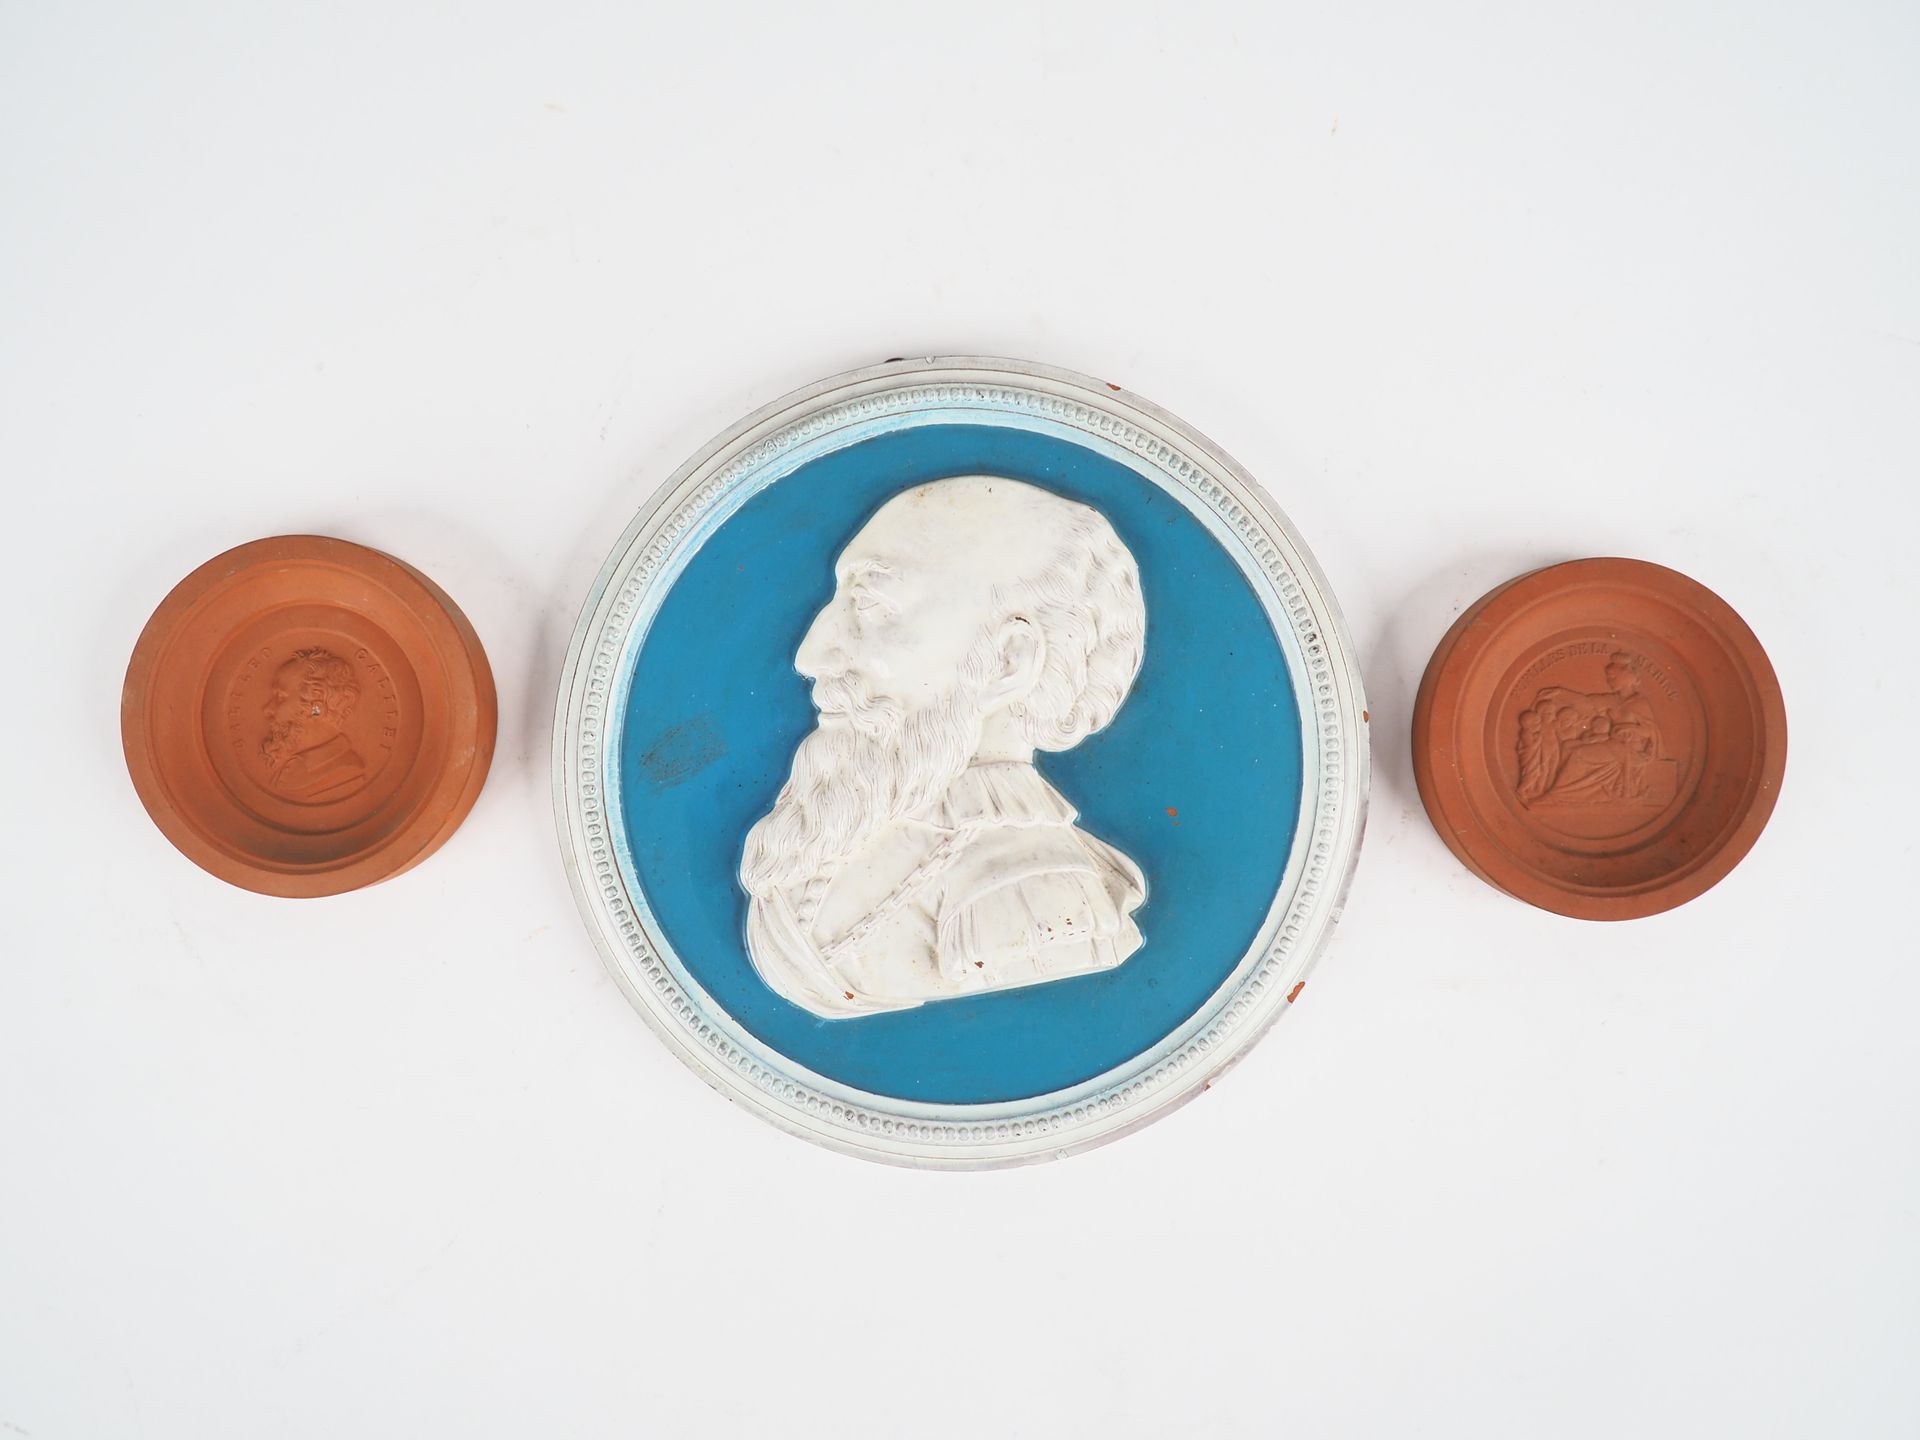 Null P.L. LARTIGUE.

奥赫（Gers）蒸汽厂的 "苏利侧面肖像 "釉面陶器奖章作品。

直径22厘米

一对带有海军病房寓意的奖章和 "Ga&hellip;